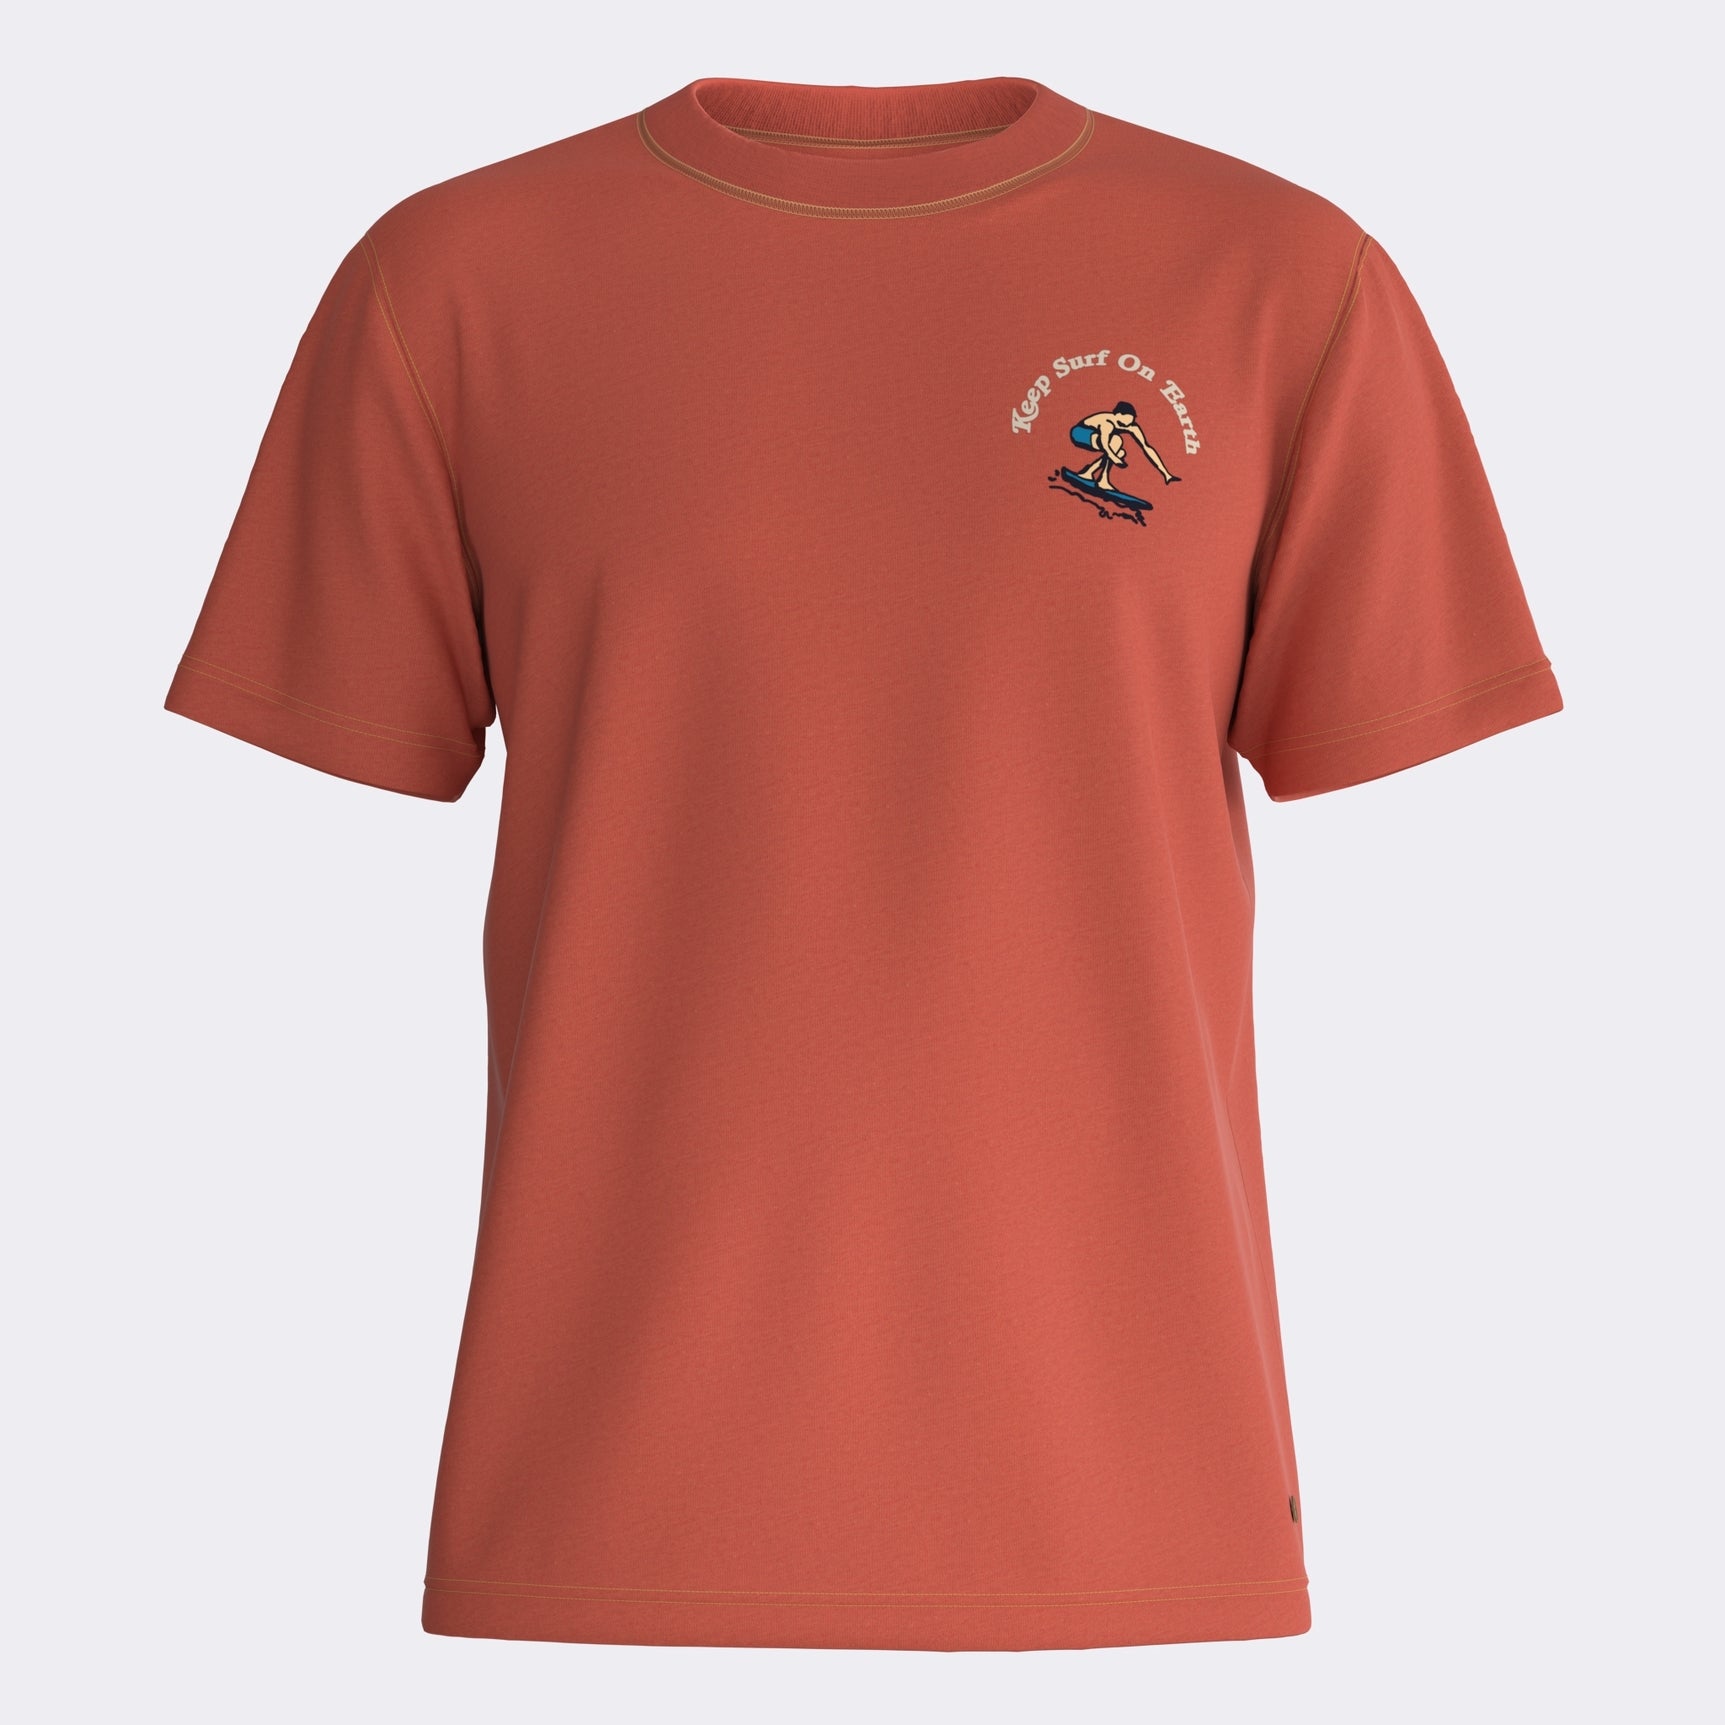 Faguo - Terra Cotta t-shirt in Cotton & Seawool Fibers - Lugny - The Good Chic